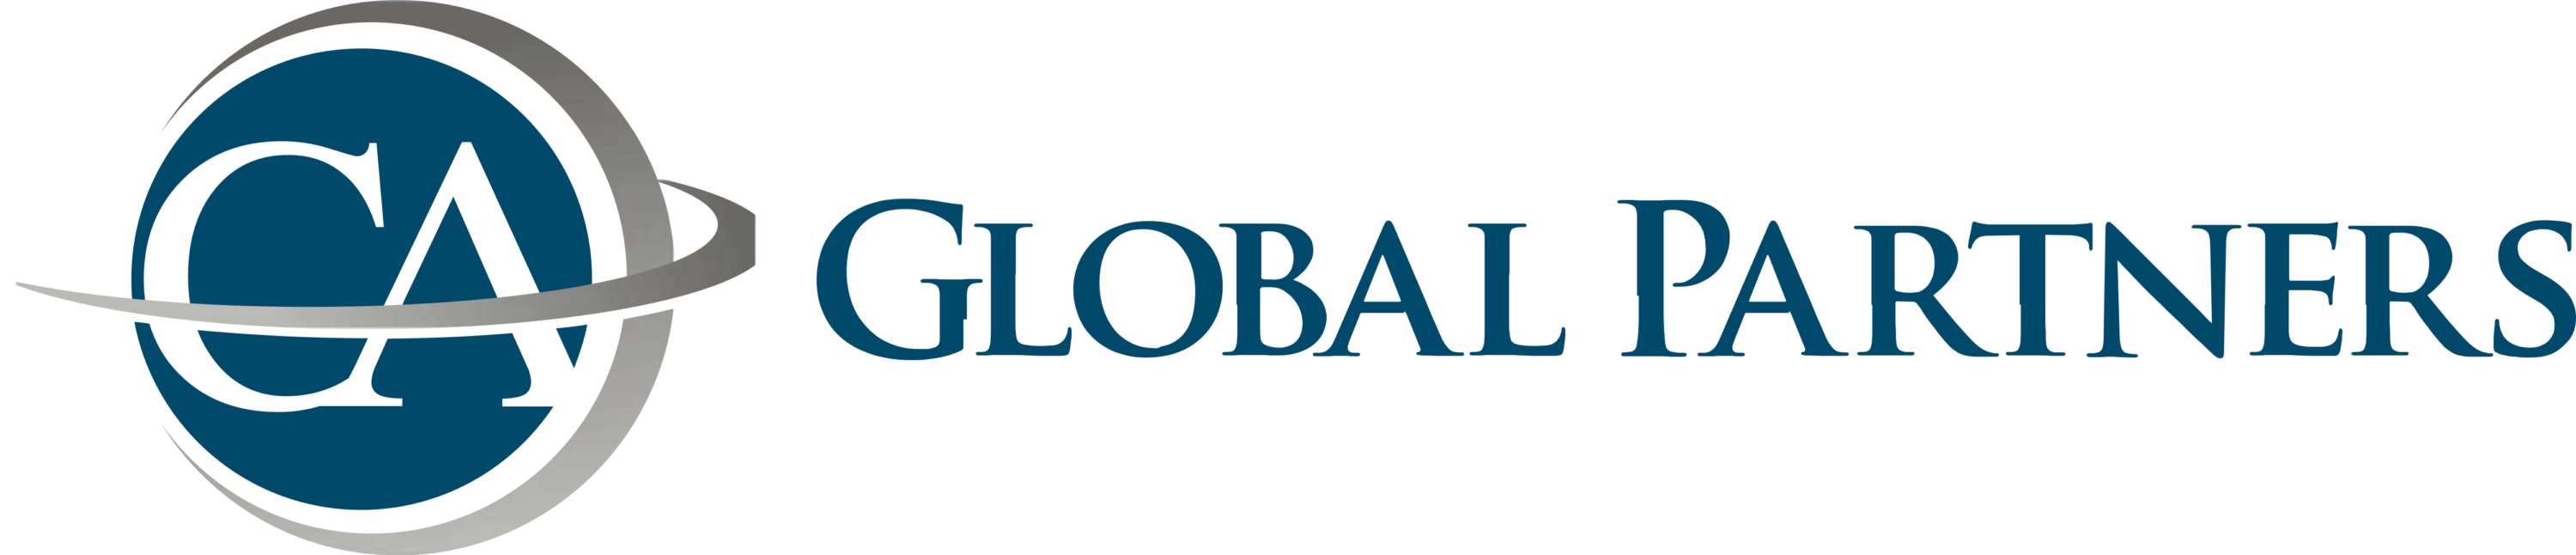 GA Global Partners Logo